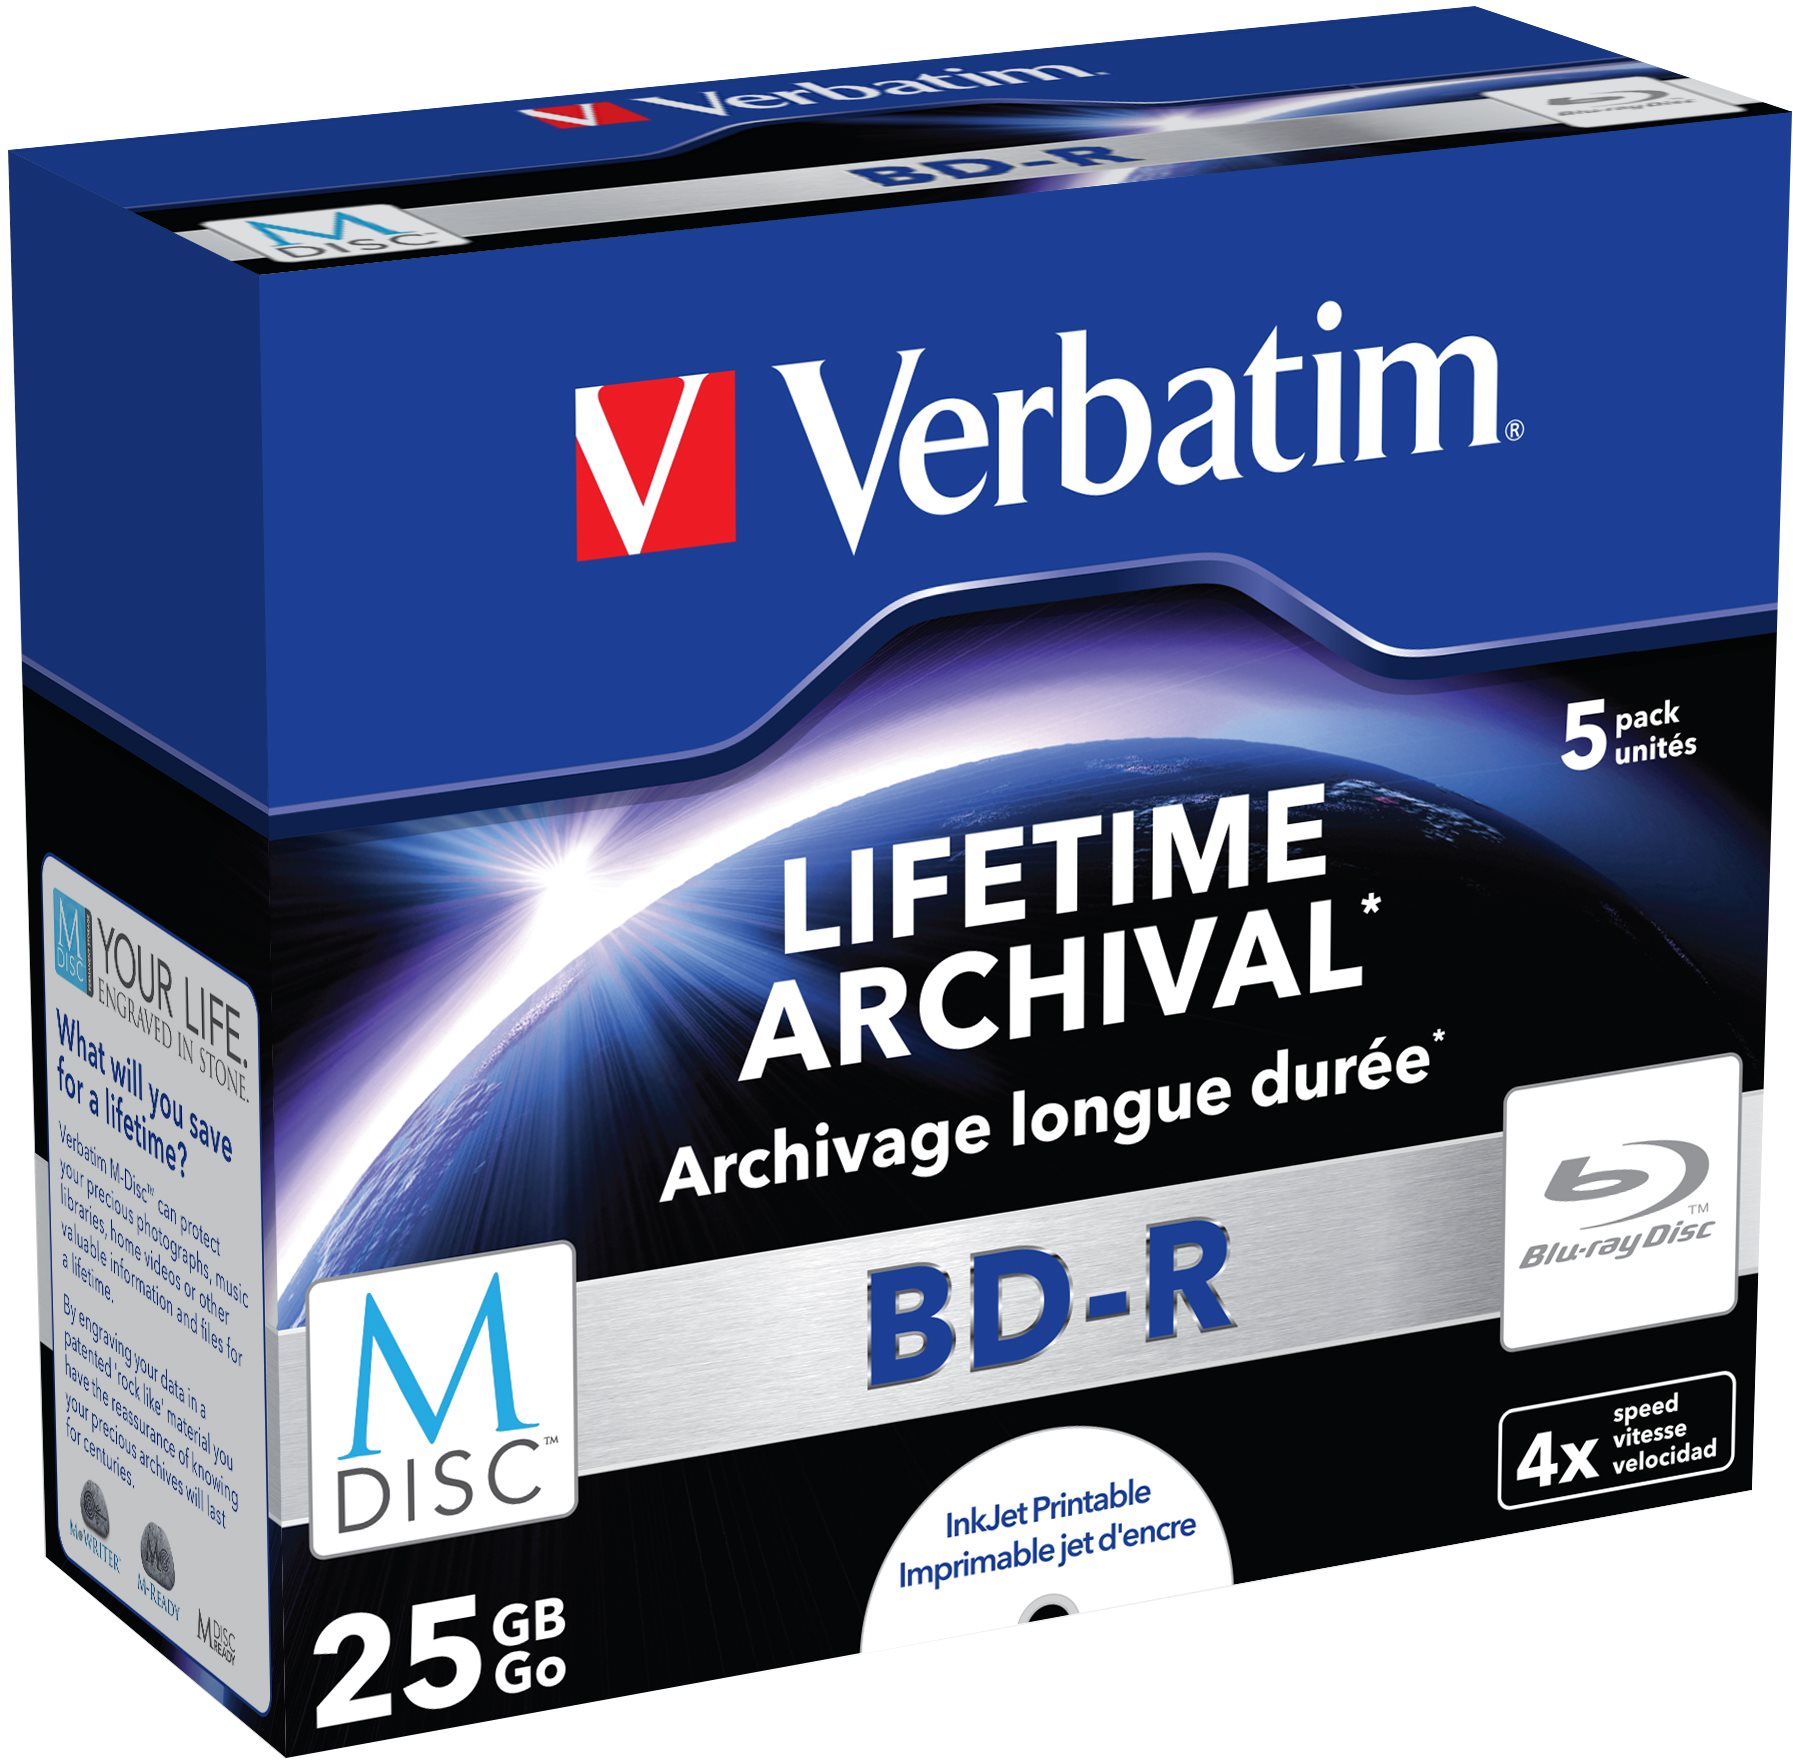 VERBATIM M-DISC BD-R SL 25GB 4x INKJET PRINTABLE spindle 5 db/BAL